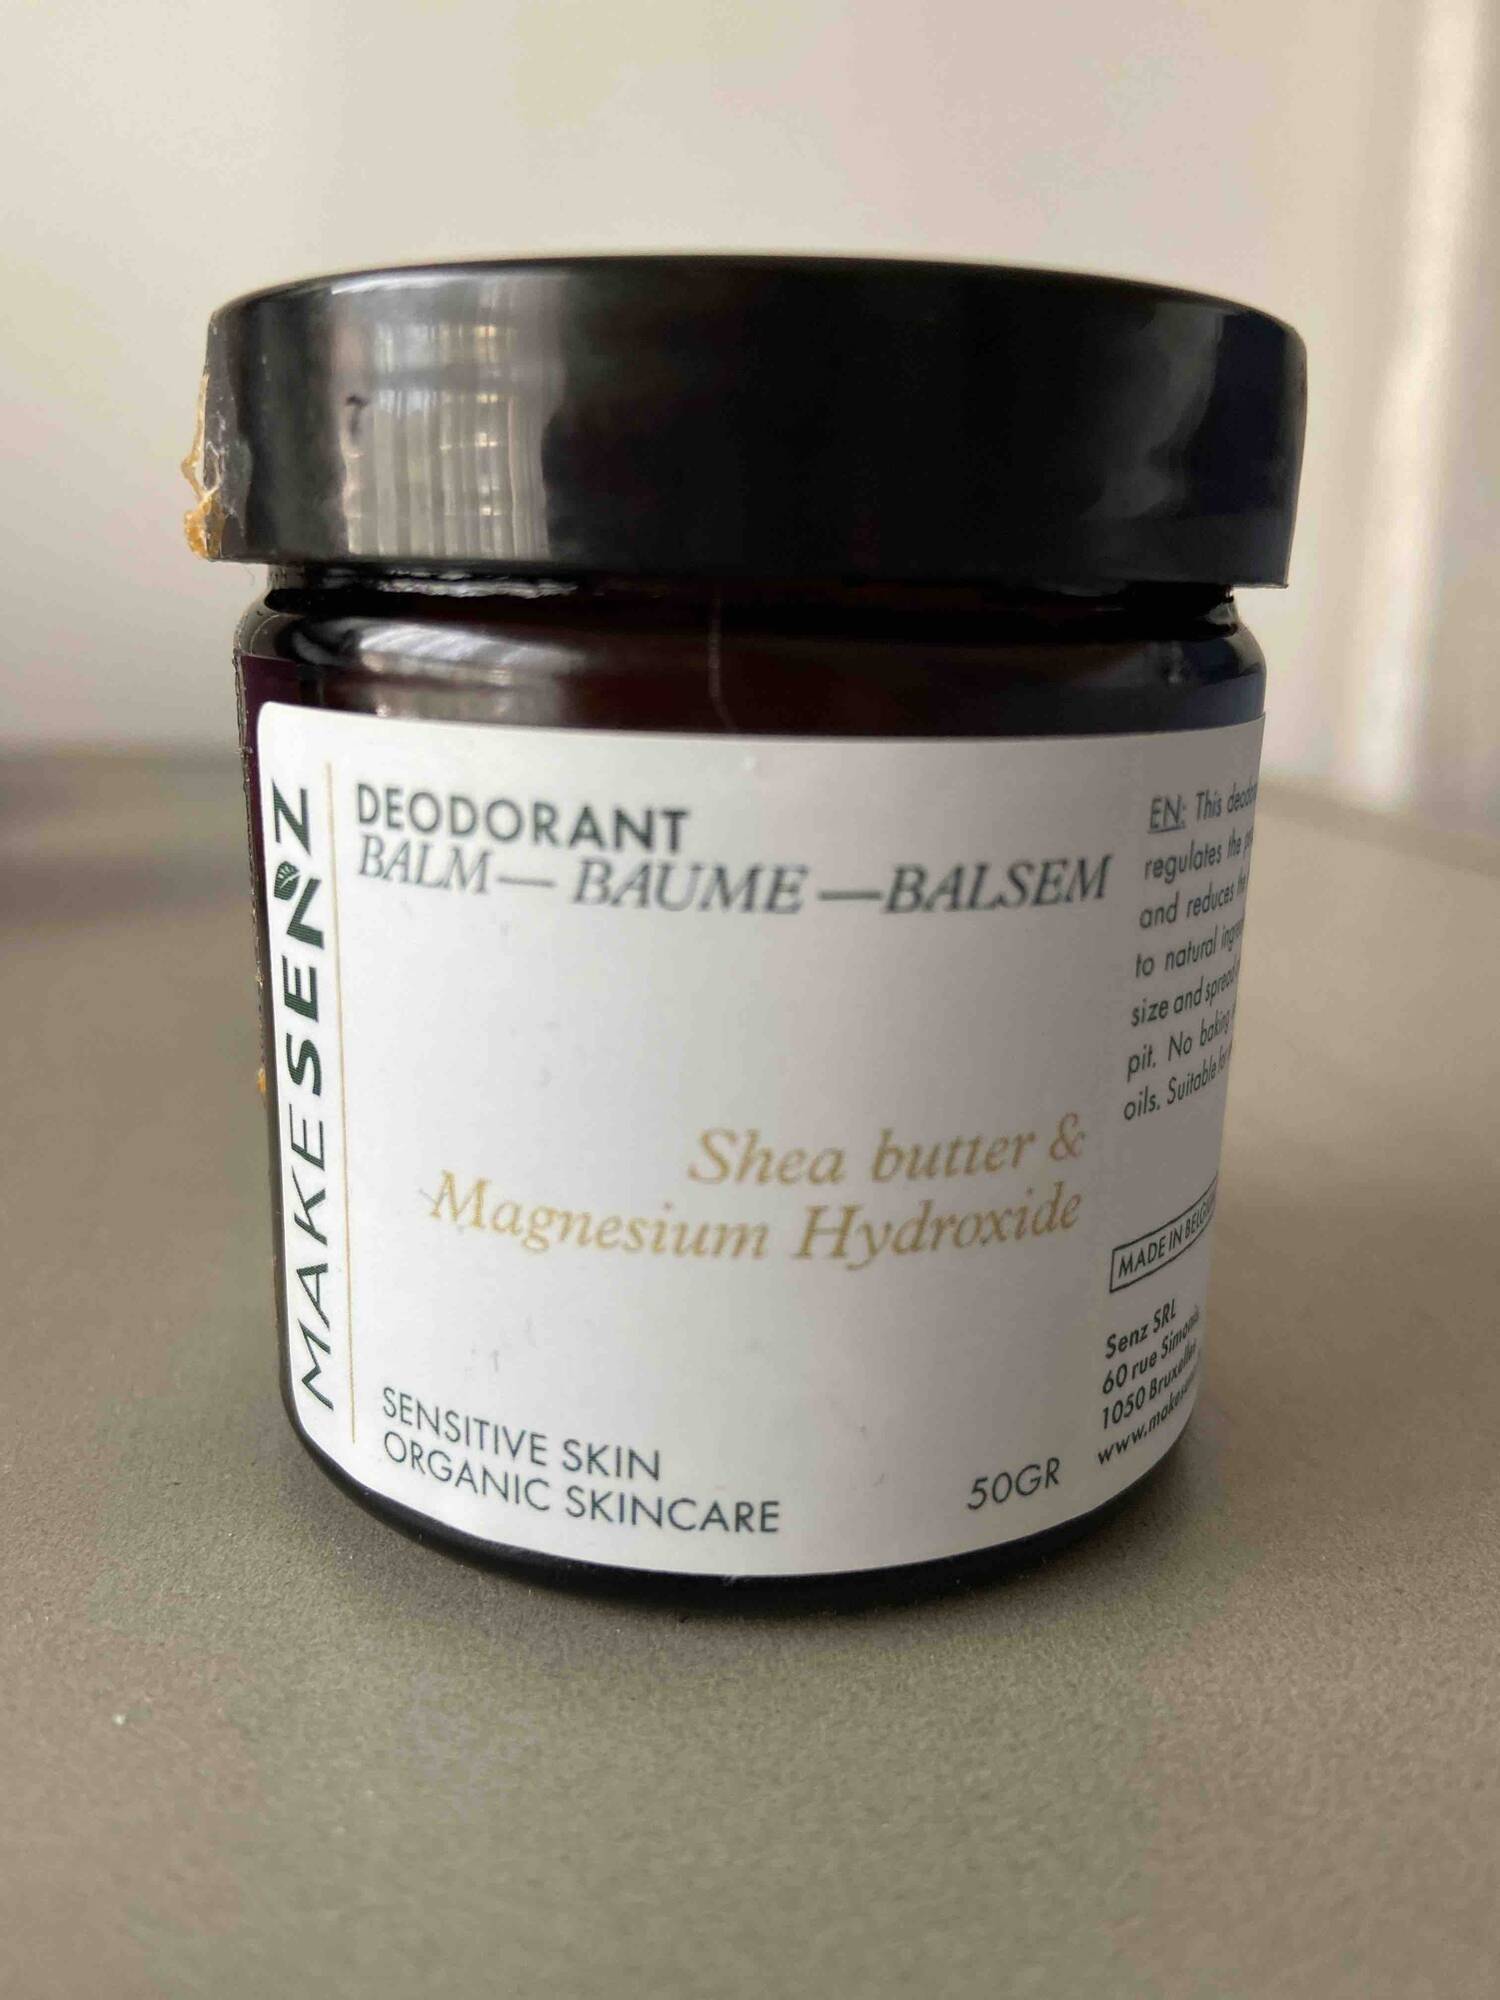 MAKE SENZ - Deodorant baume shea butter & magnesium hydroxide